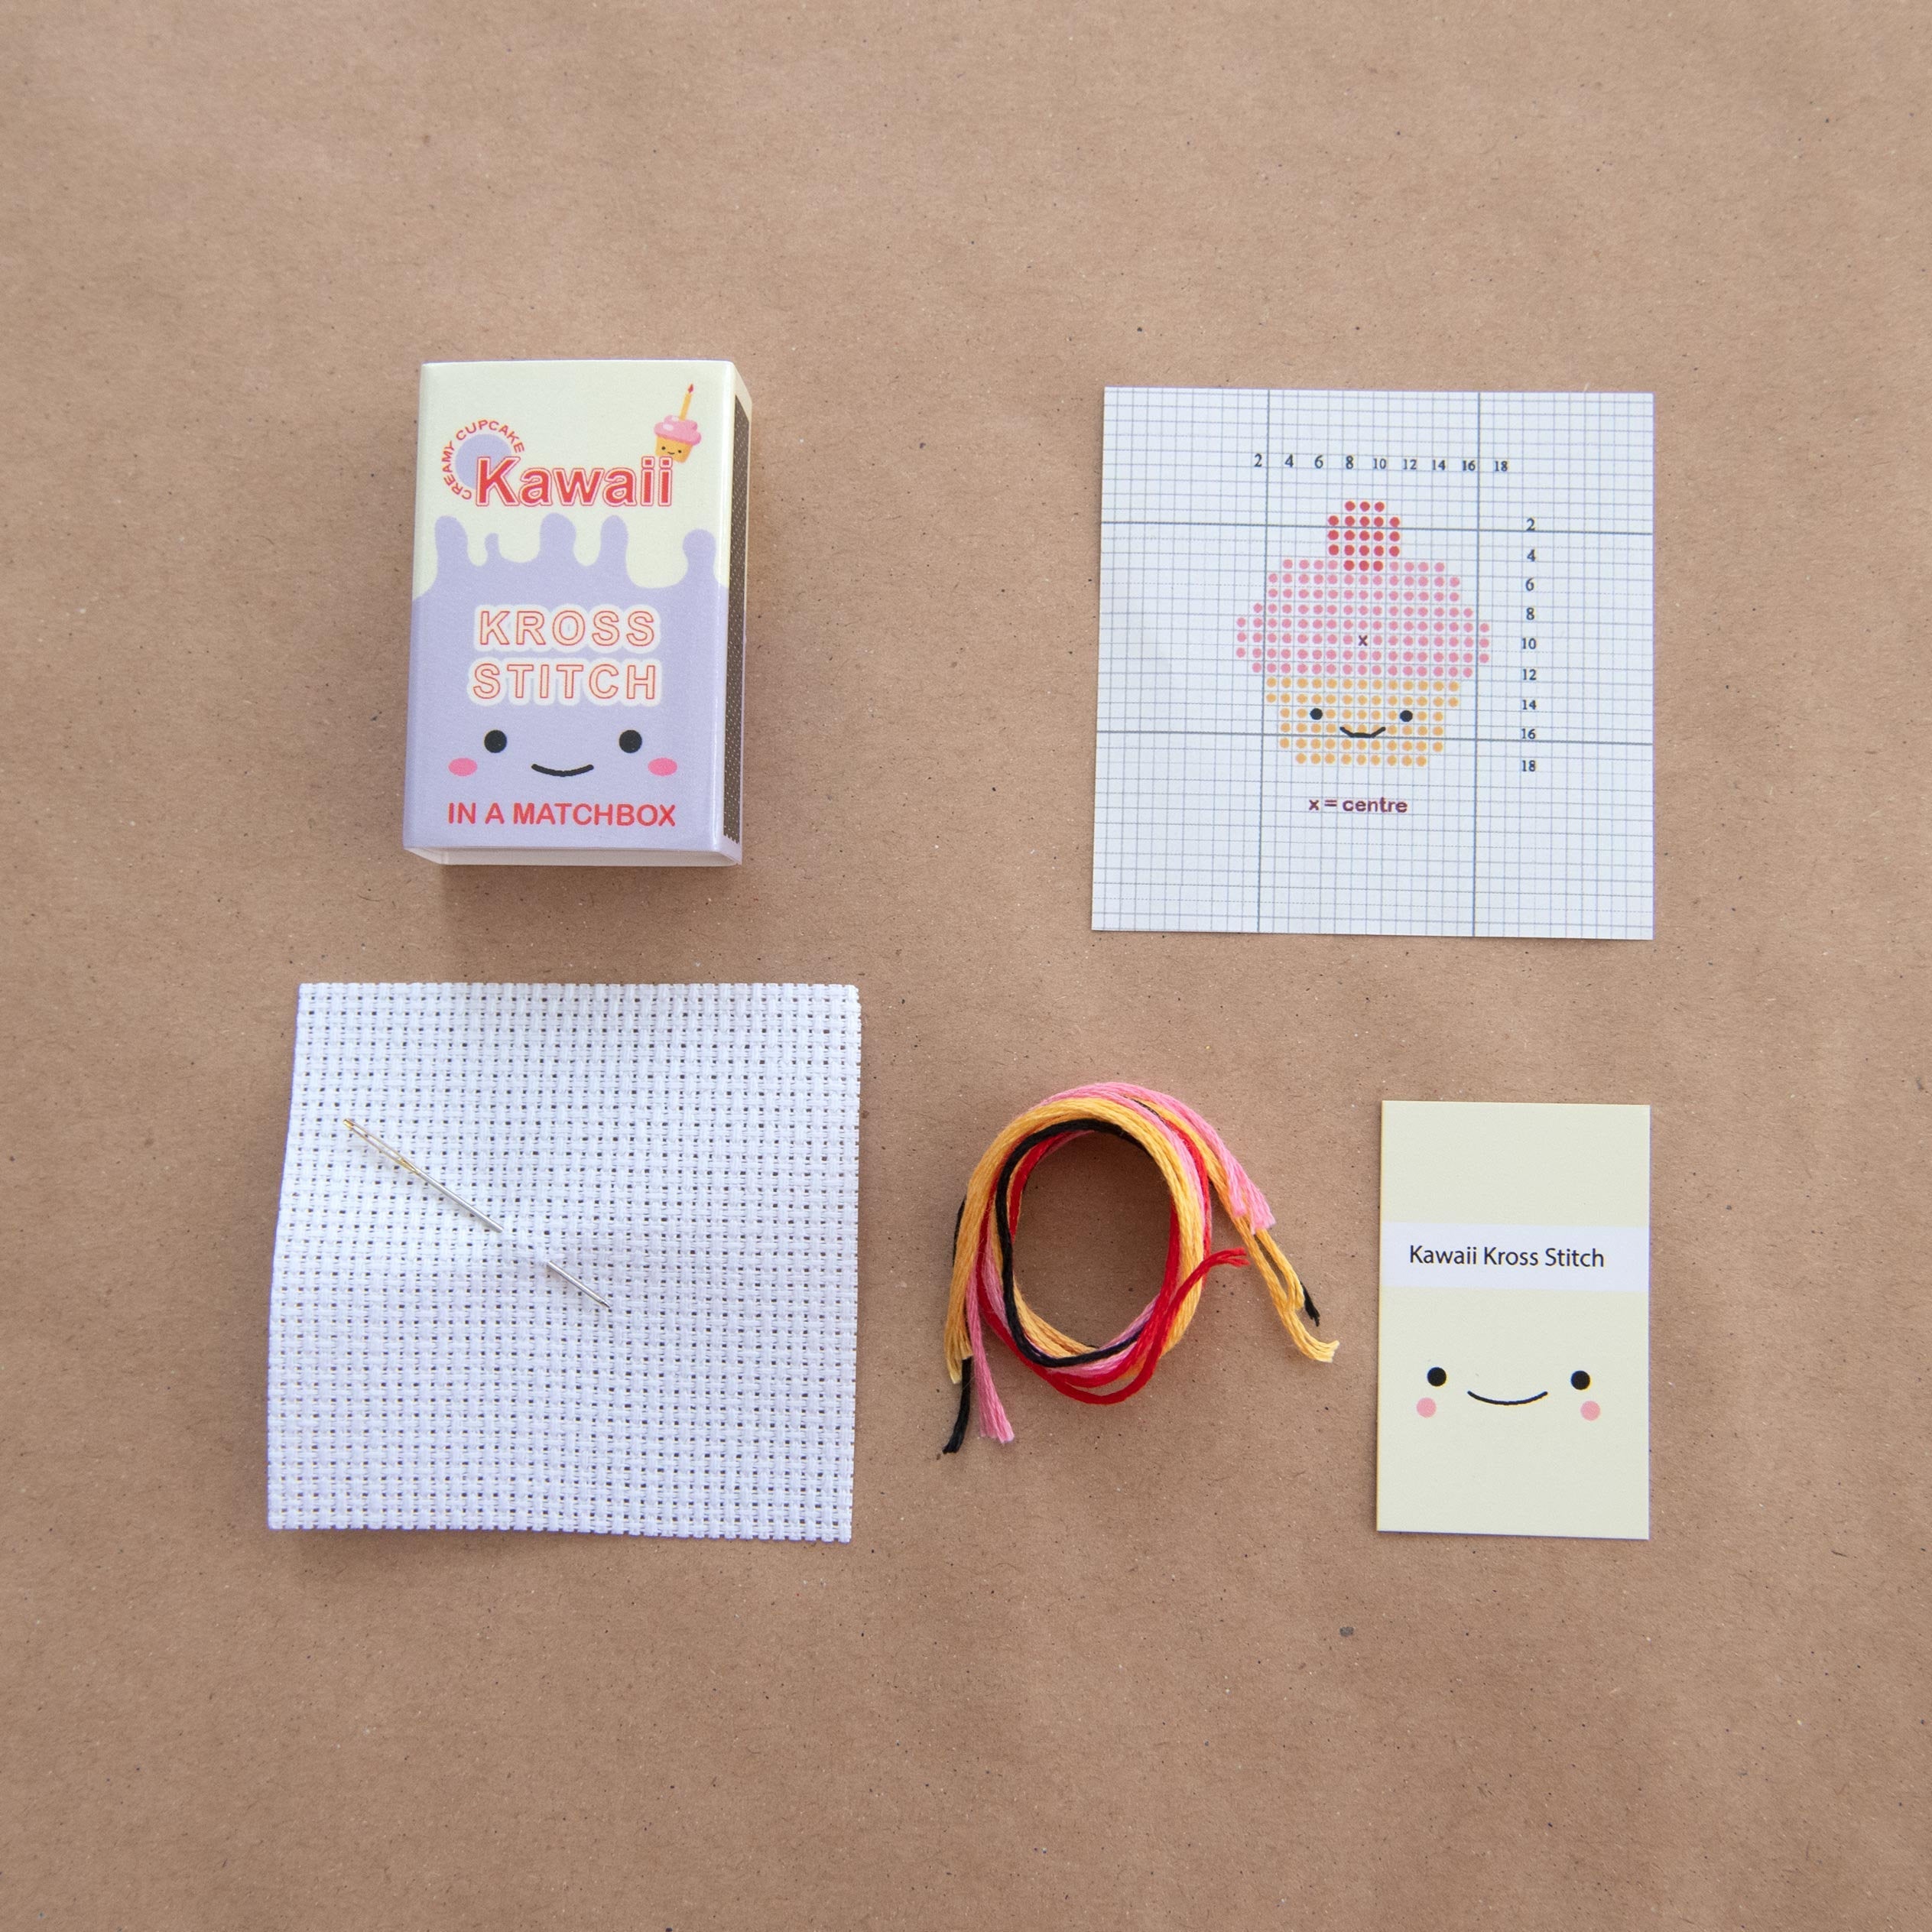 Mini Cross Stitch Kit With Kawaii Cup Cake In A Matchbox